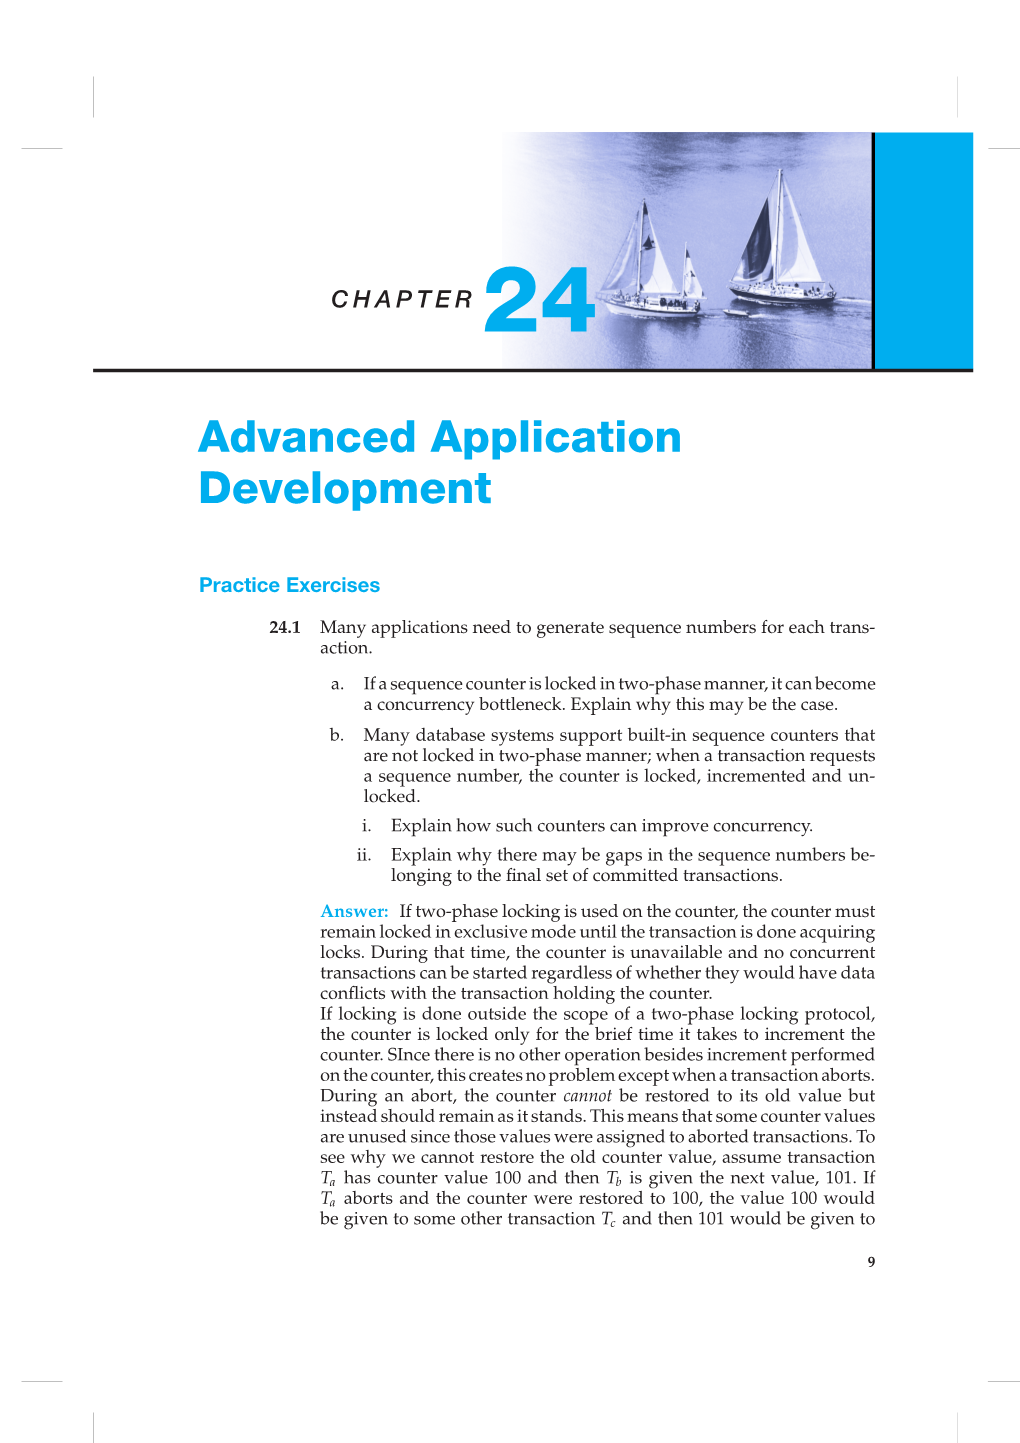 Advanced Application Development